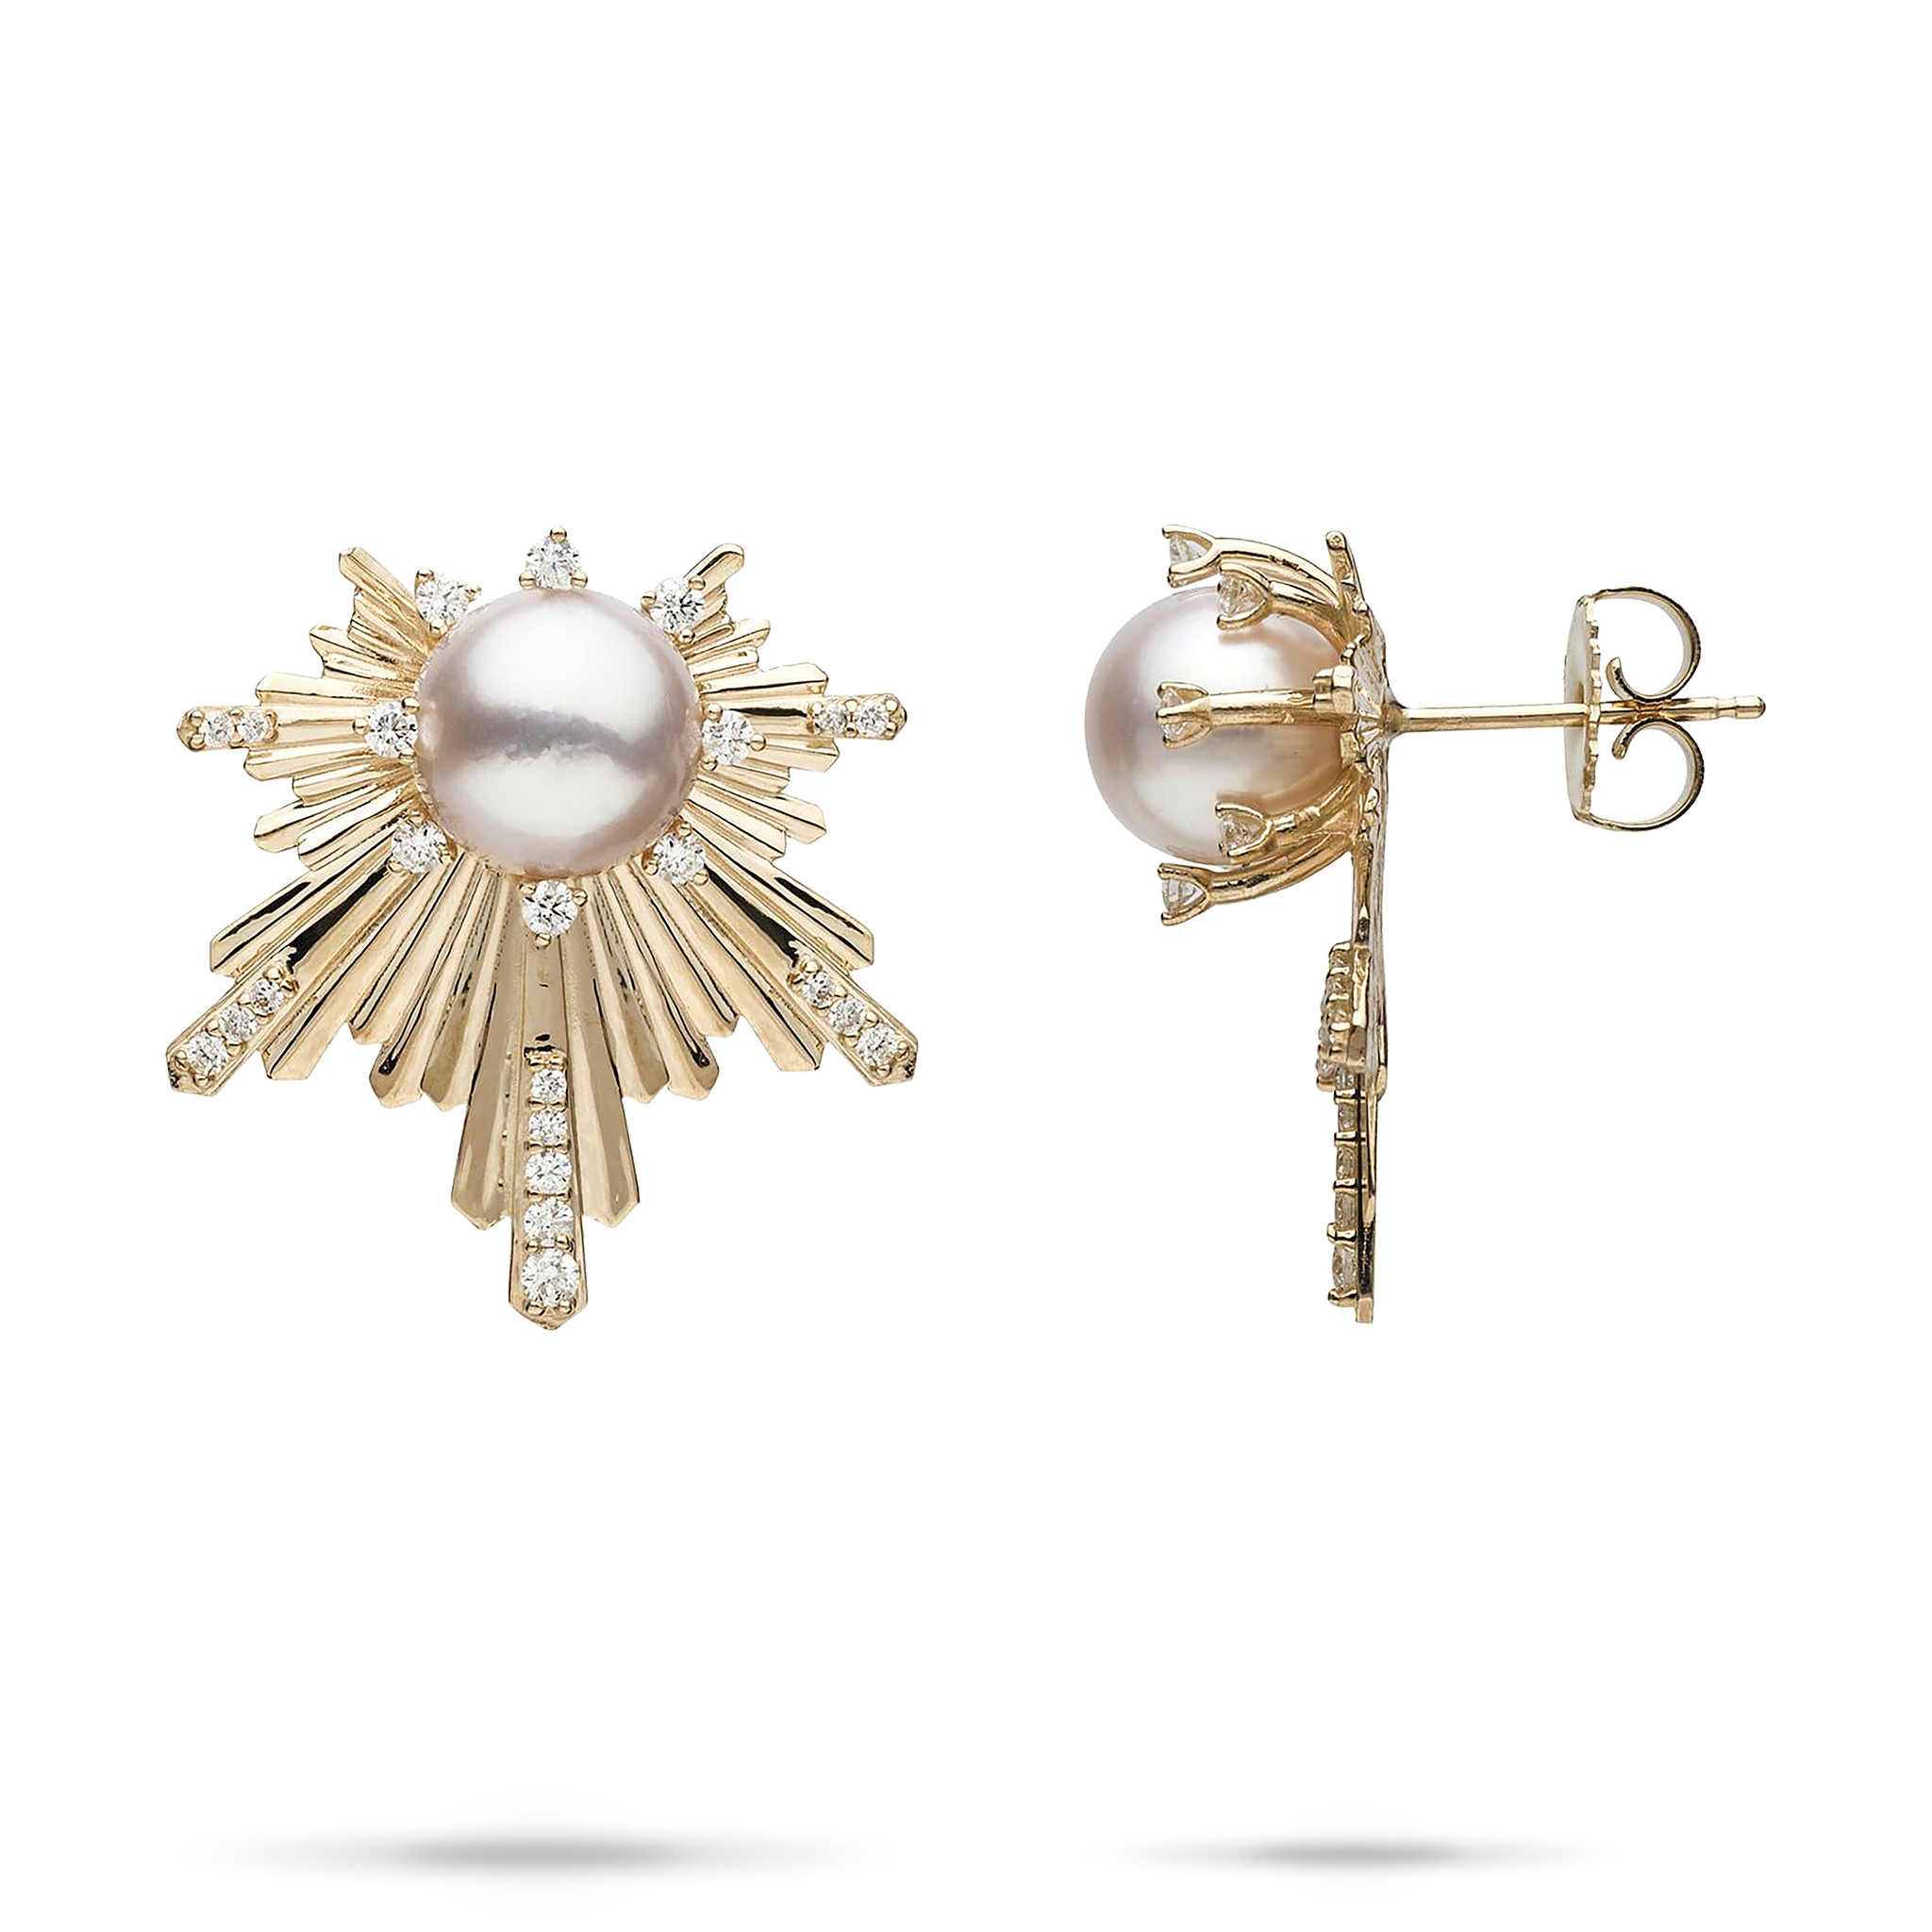 E Hoʻāla Akoya Pearl Earrings in Gold with Diamonds - 23mm